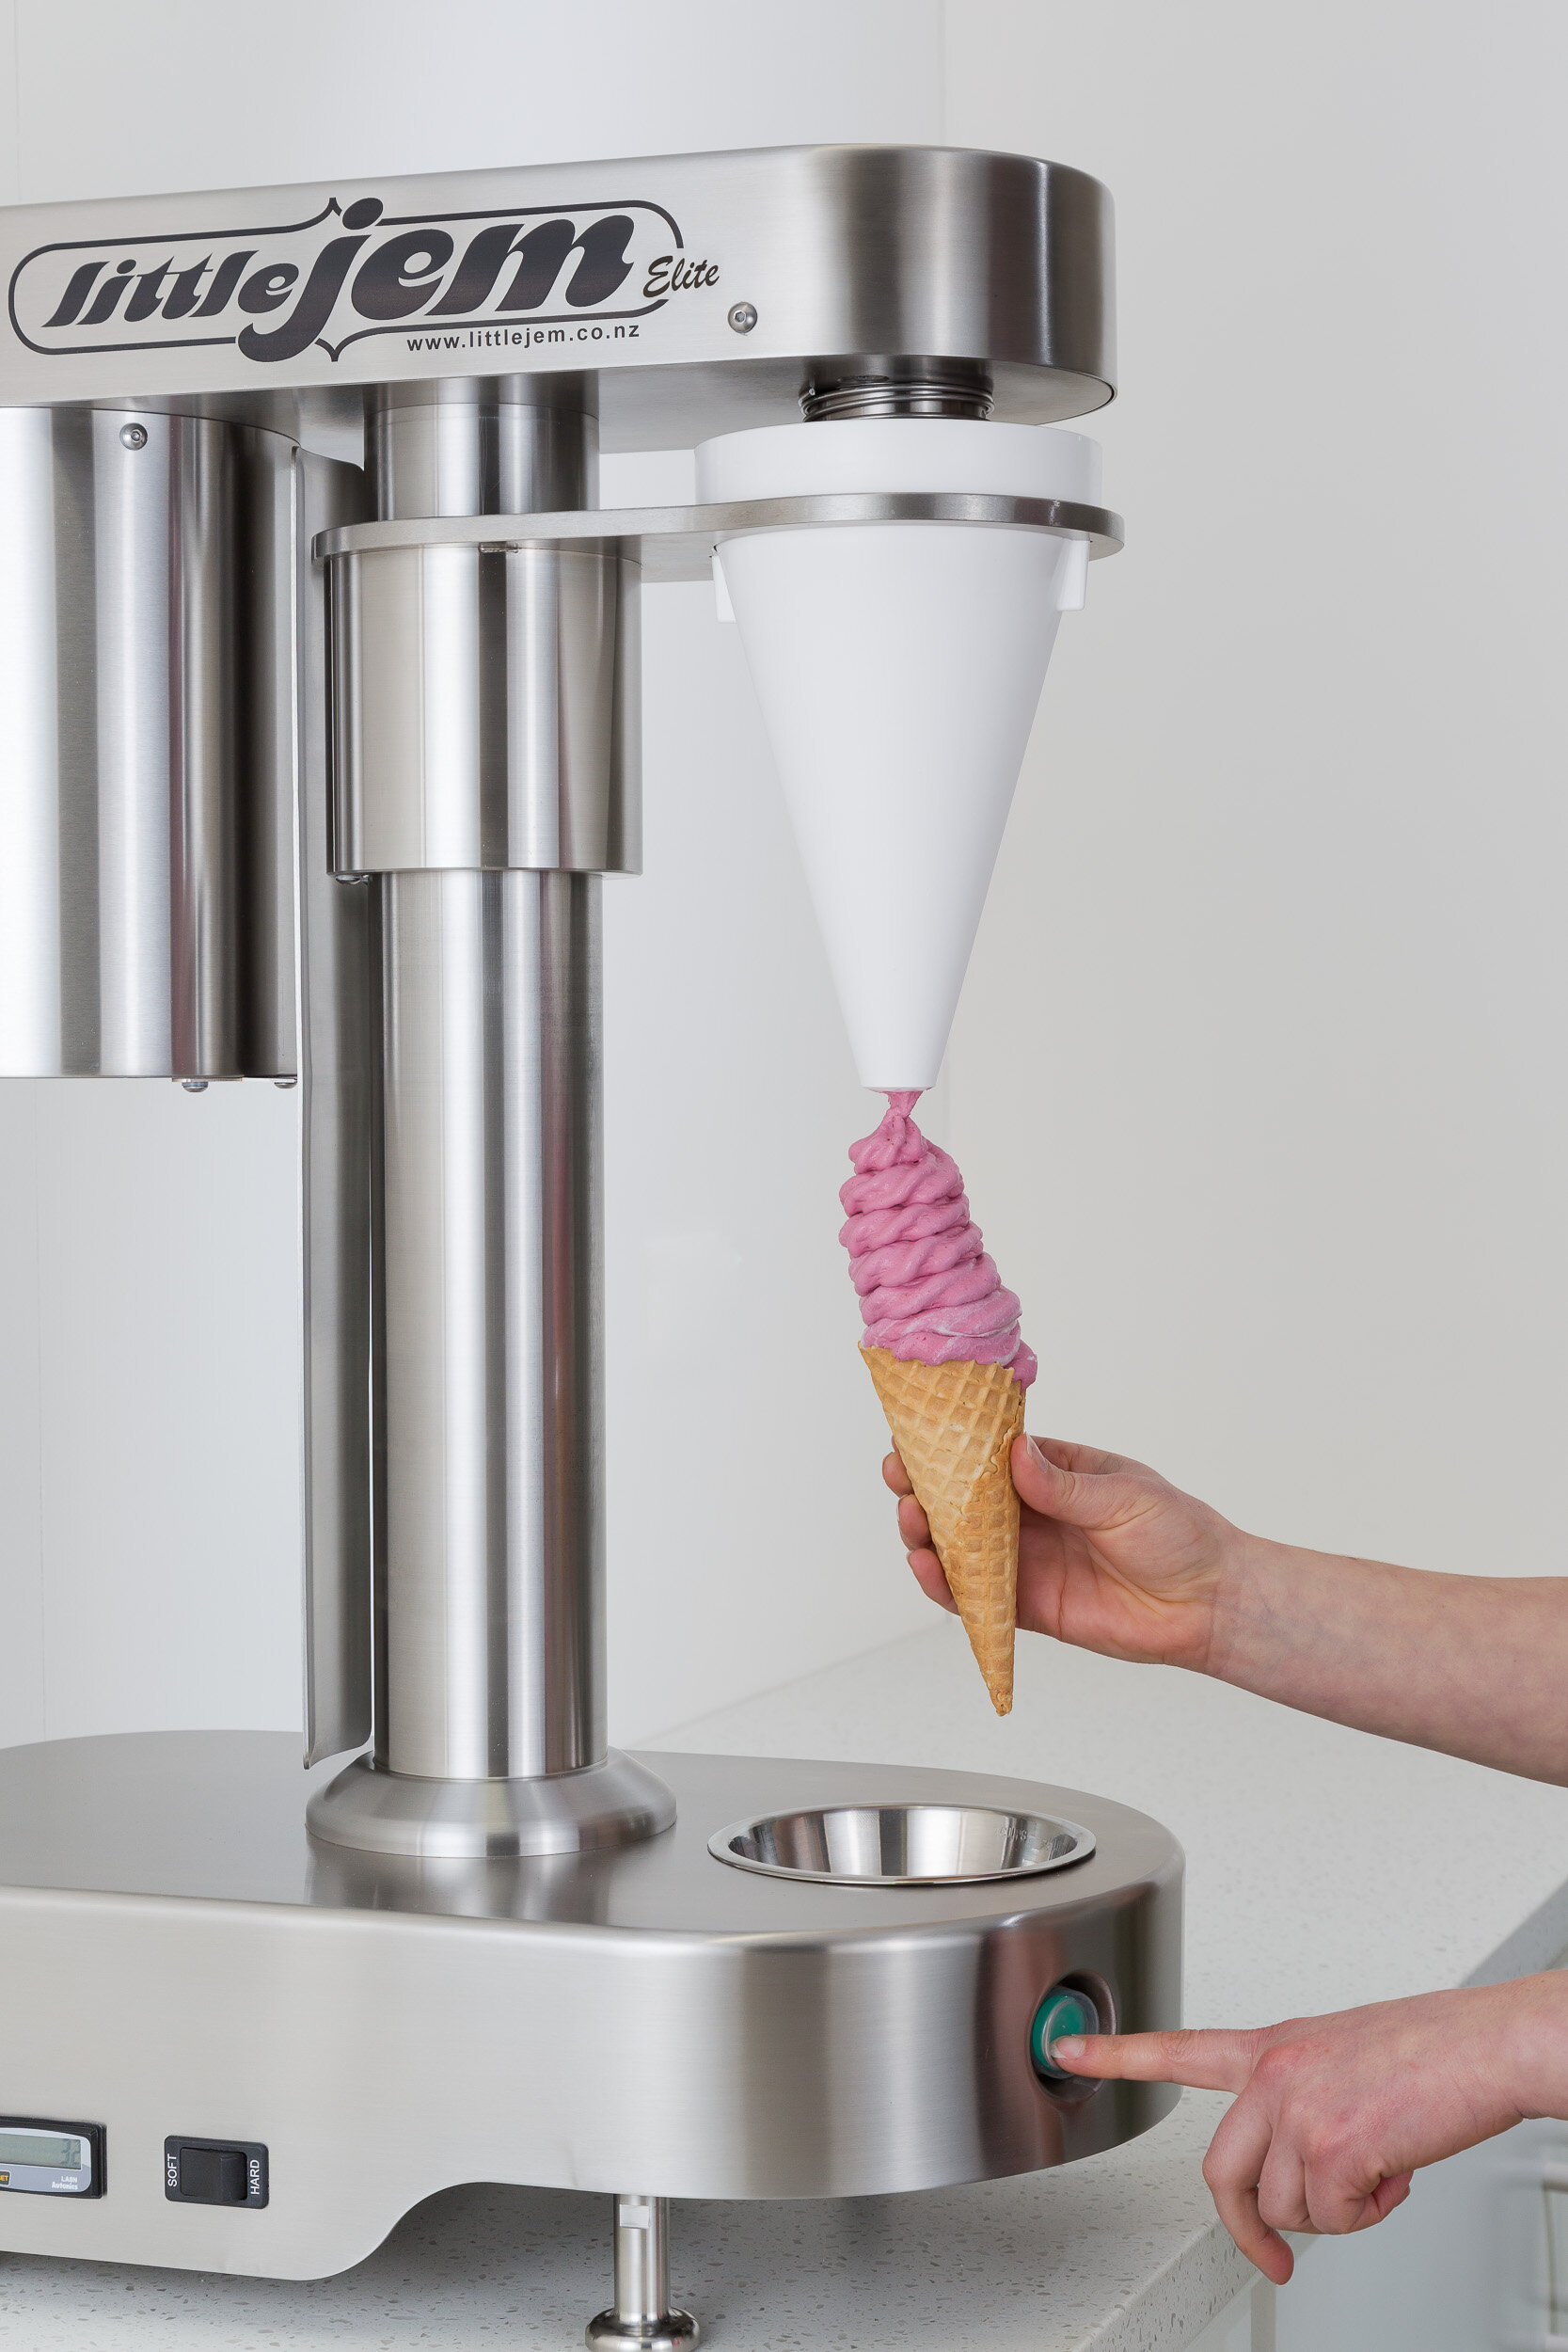 How Does A Soft Serve Ice Cream Machine Work